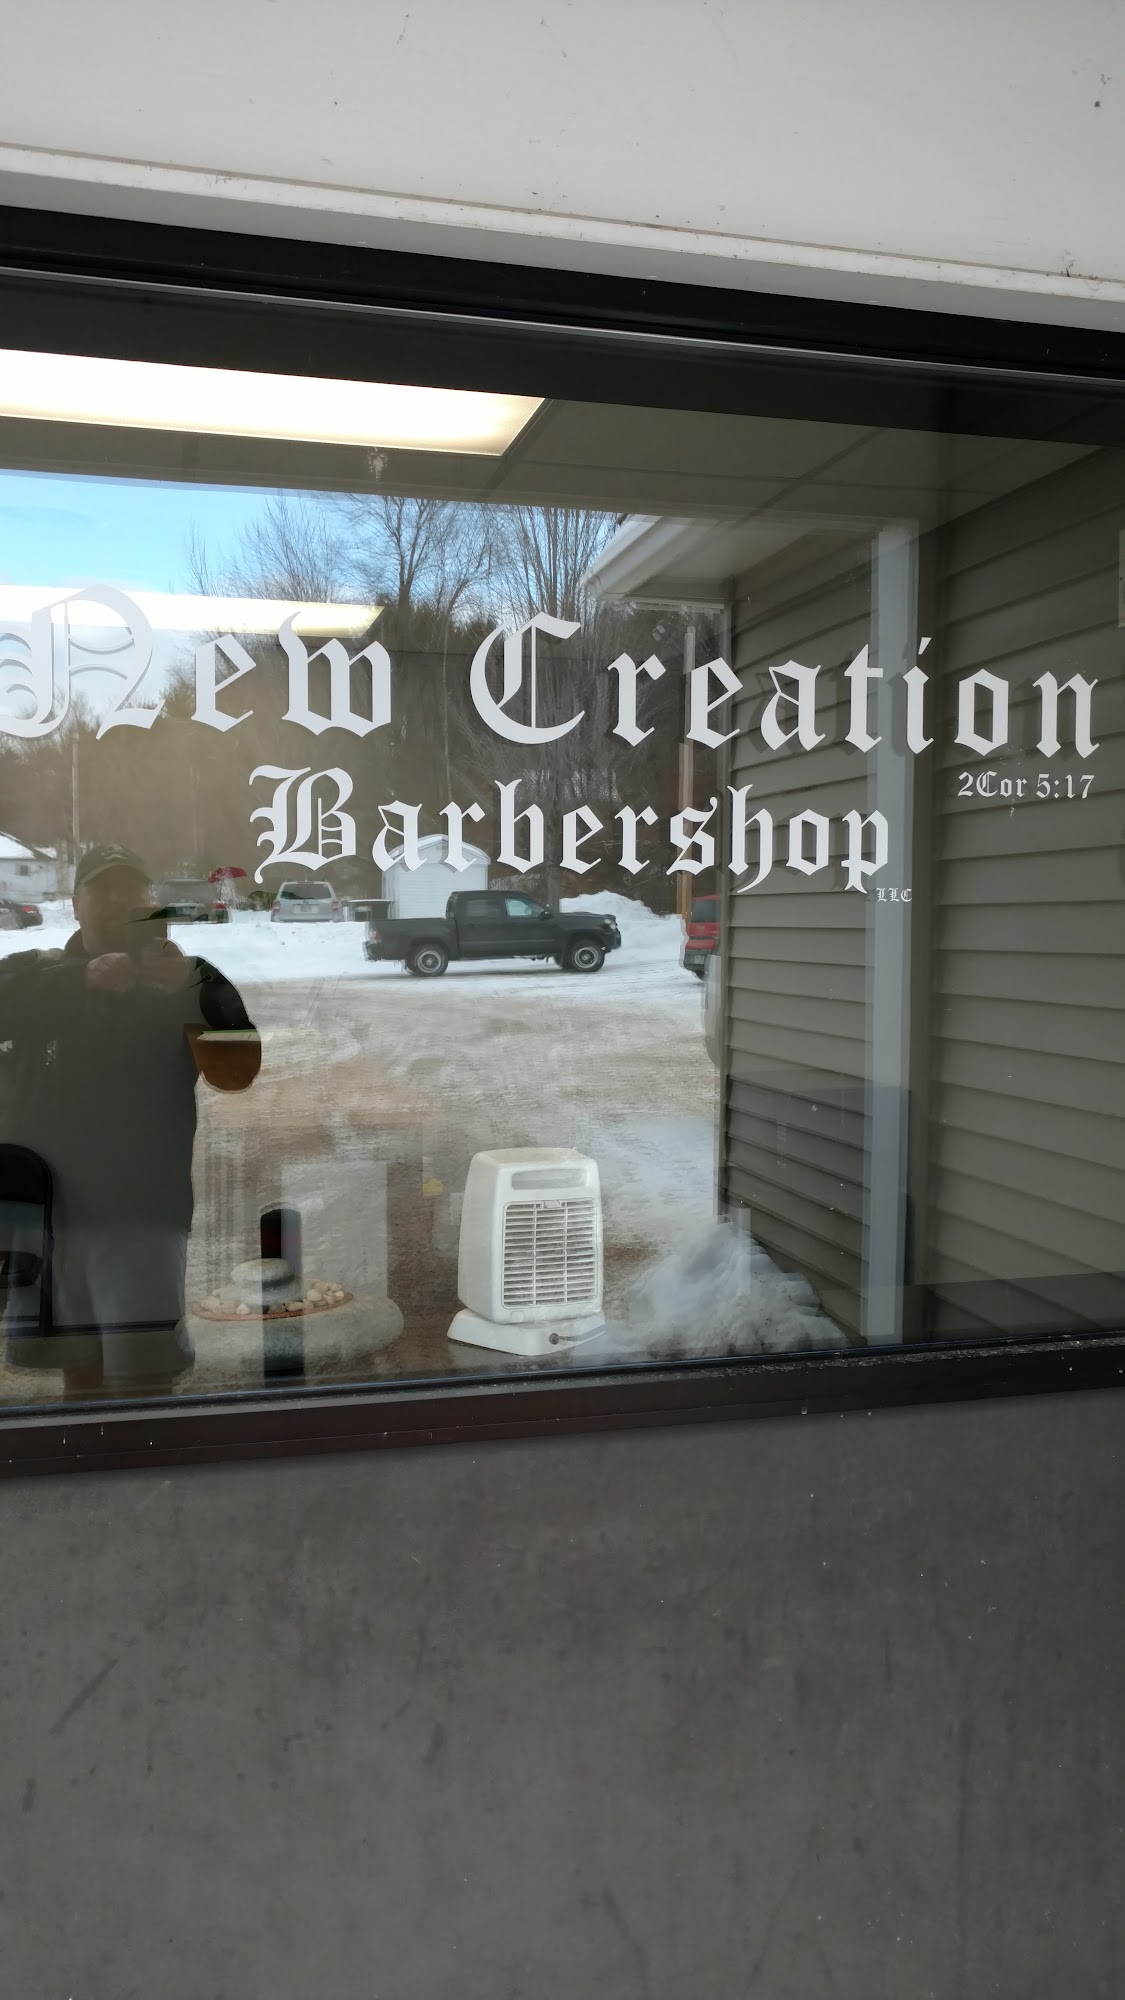 New Creation Barbershop 6 Varney Rd, Wolfeboro New Hampshire 03894